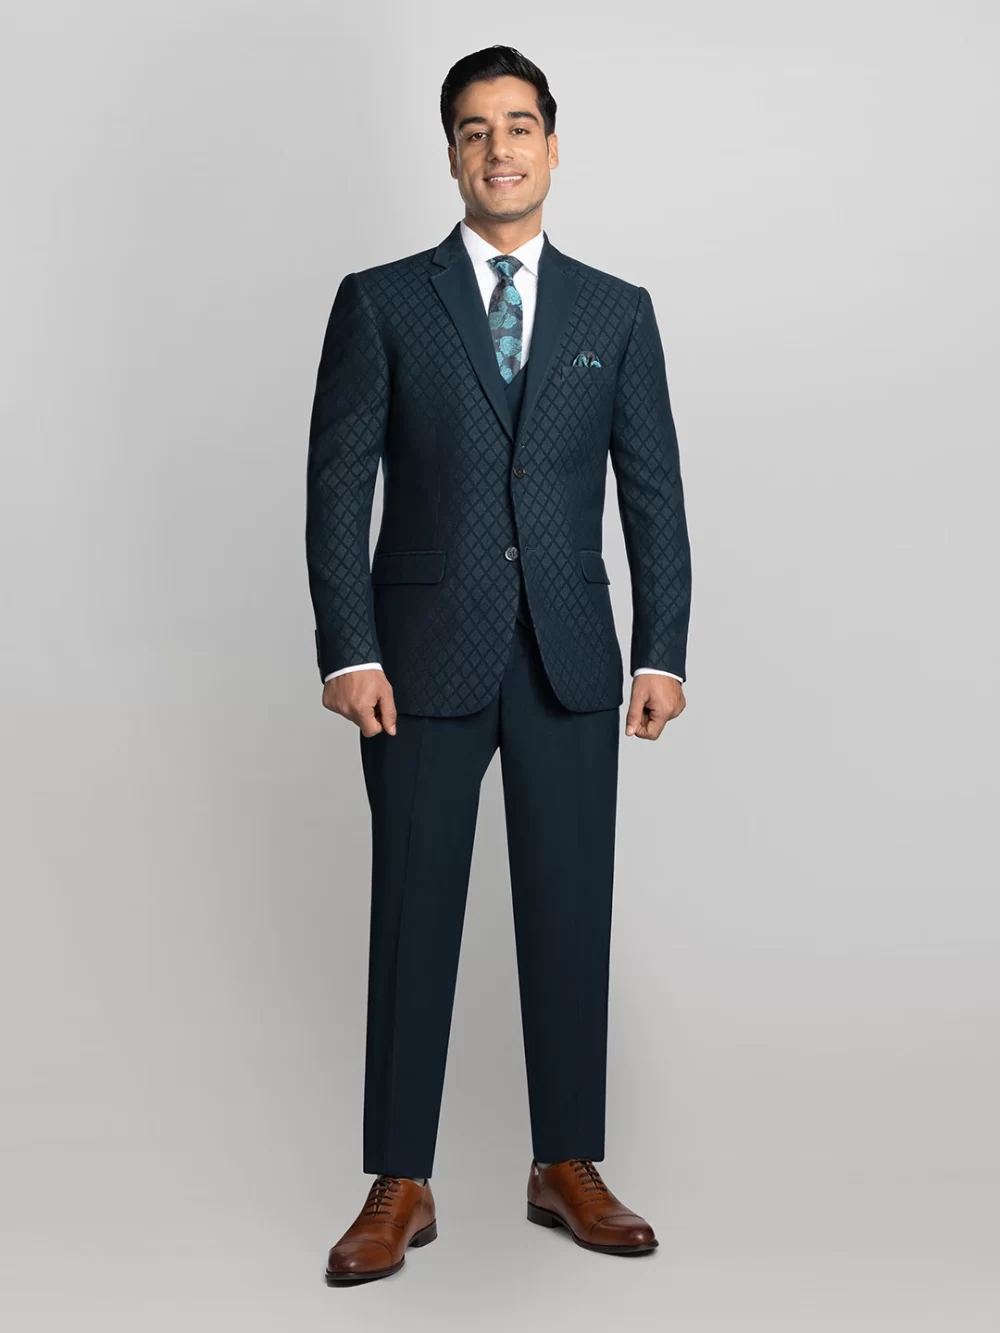 Men's 5 piece Textured Tuxedo Suit